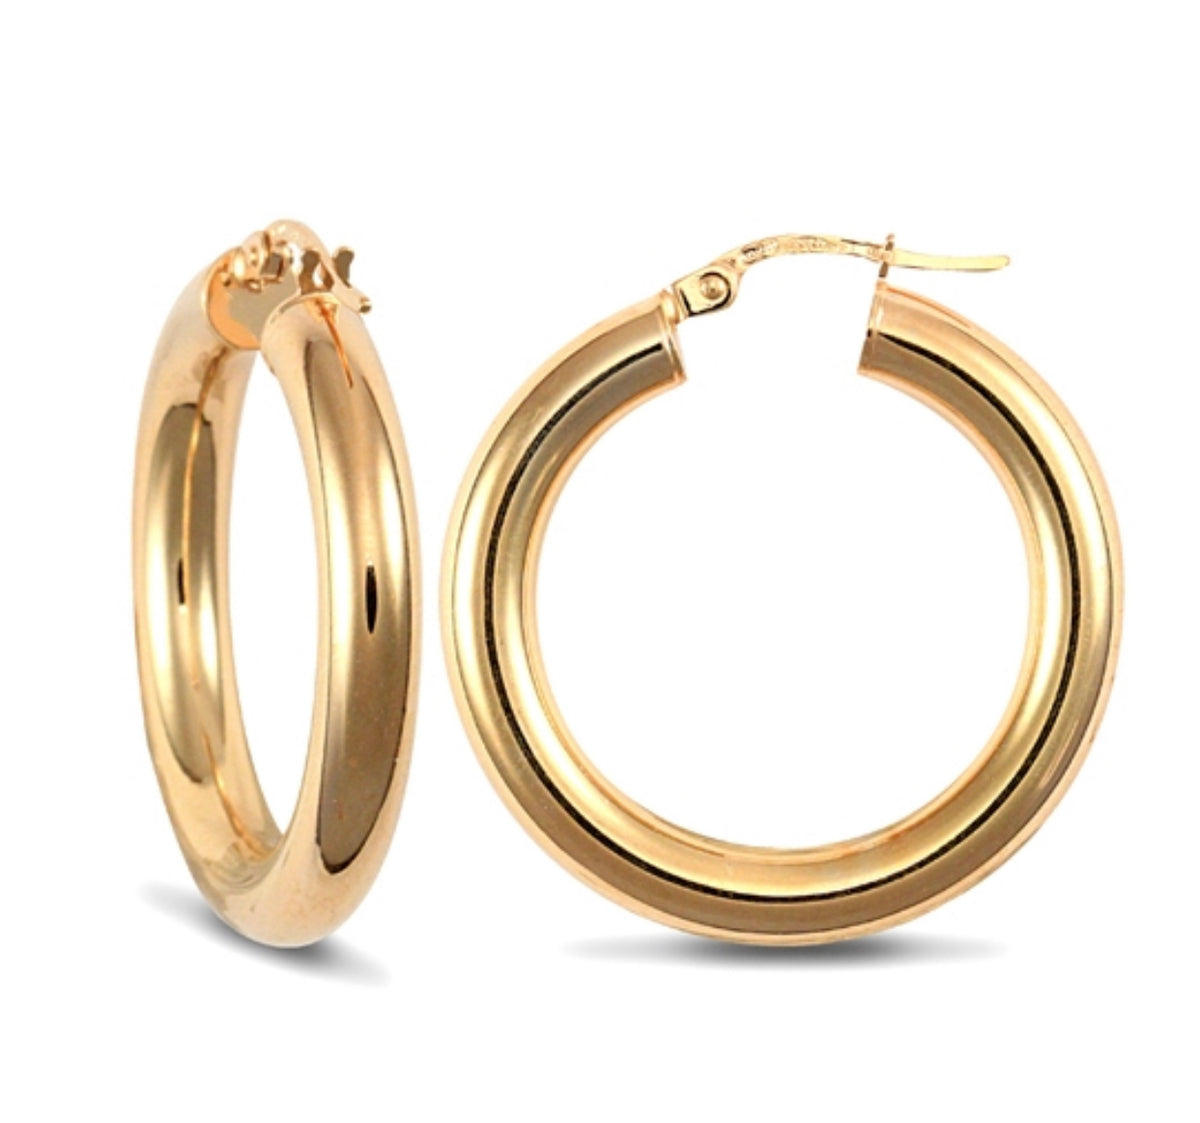 Yellow gold hoop earrings 2.4g